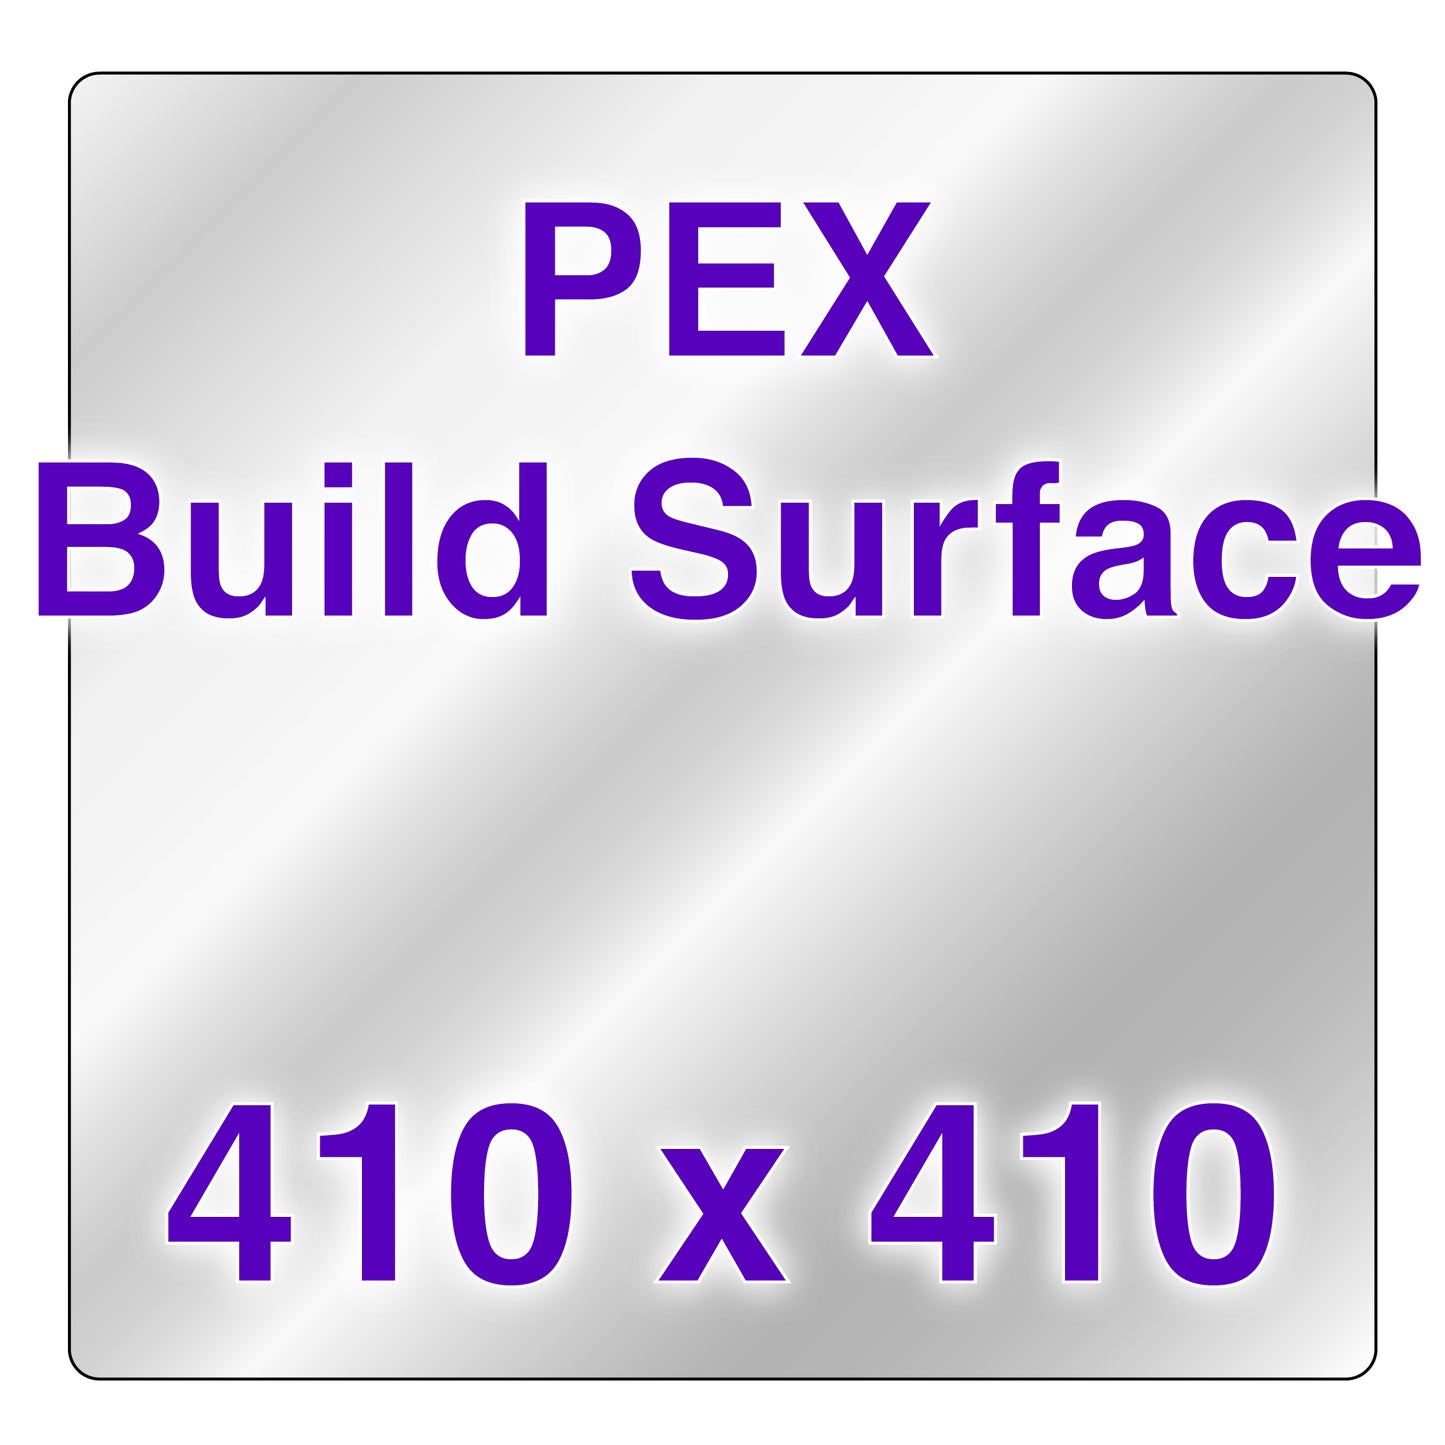 PEX Build Surface - 410 x 410